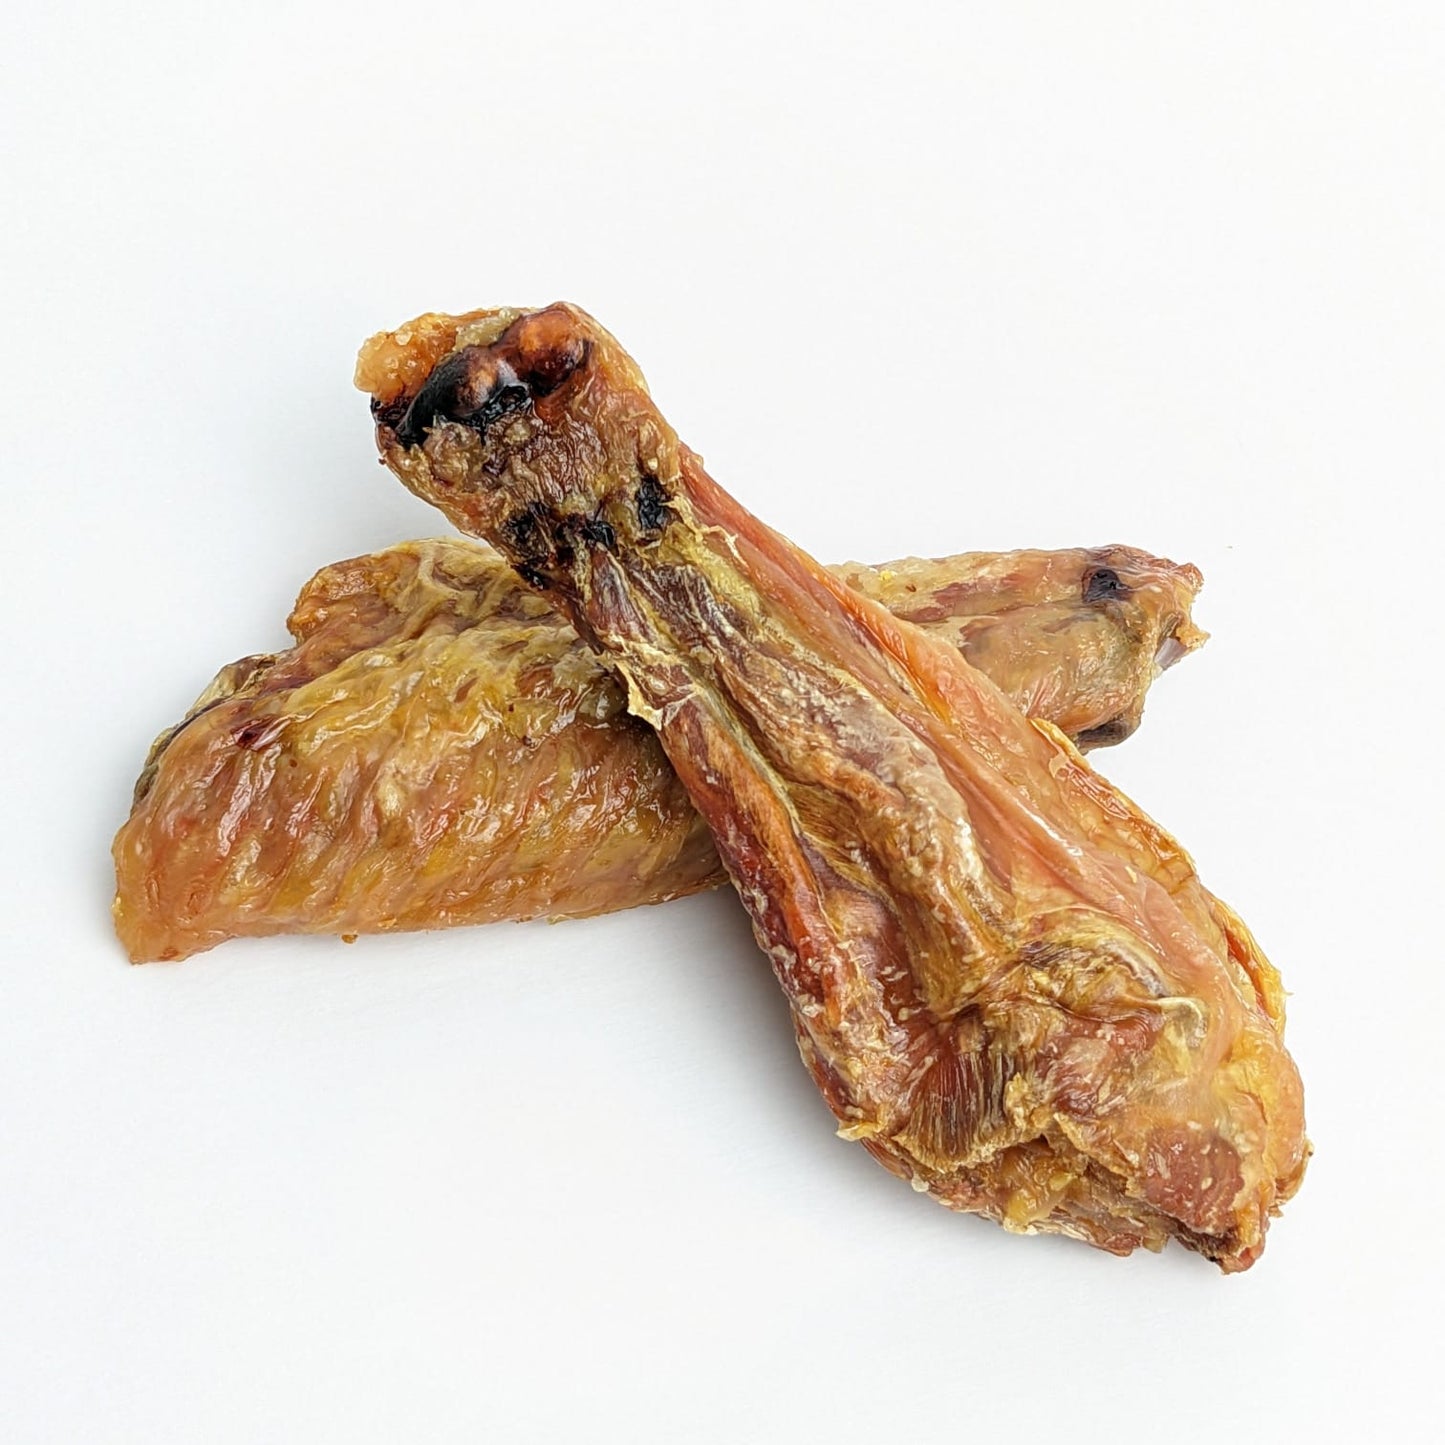 Woofur - Dehydrated Turkey Wings (Organic)